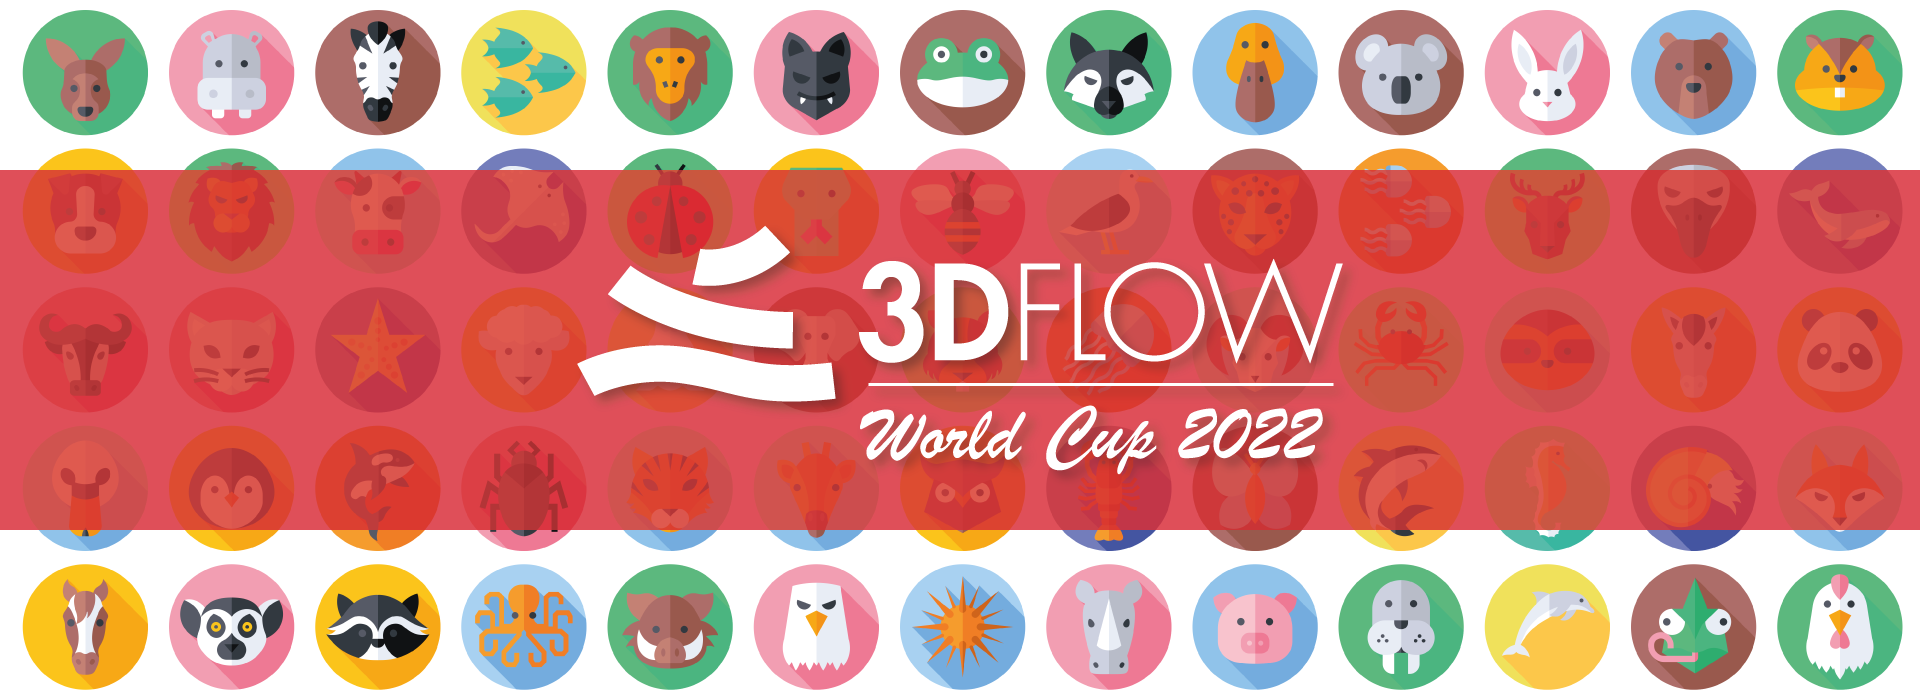 3dflow_worldcup_2022_header